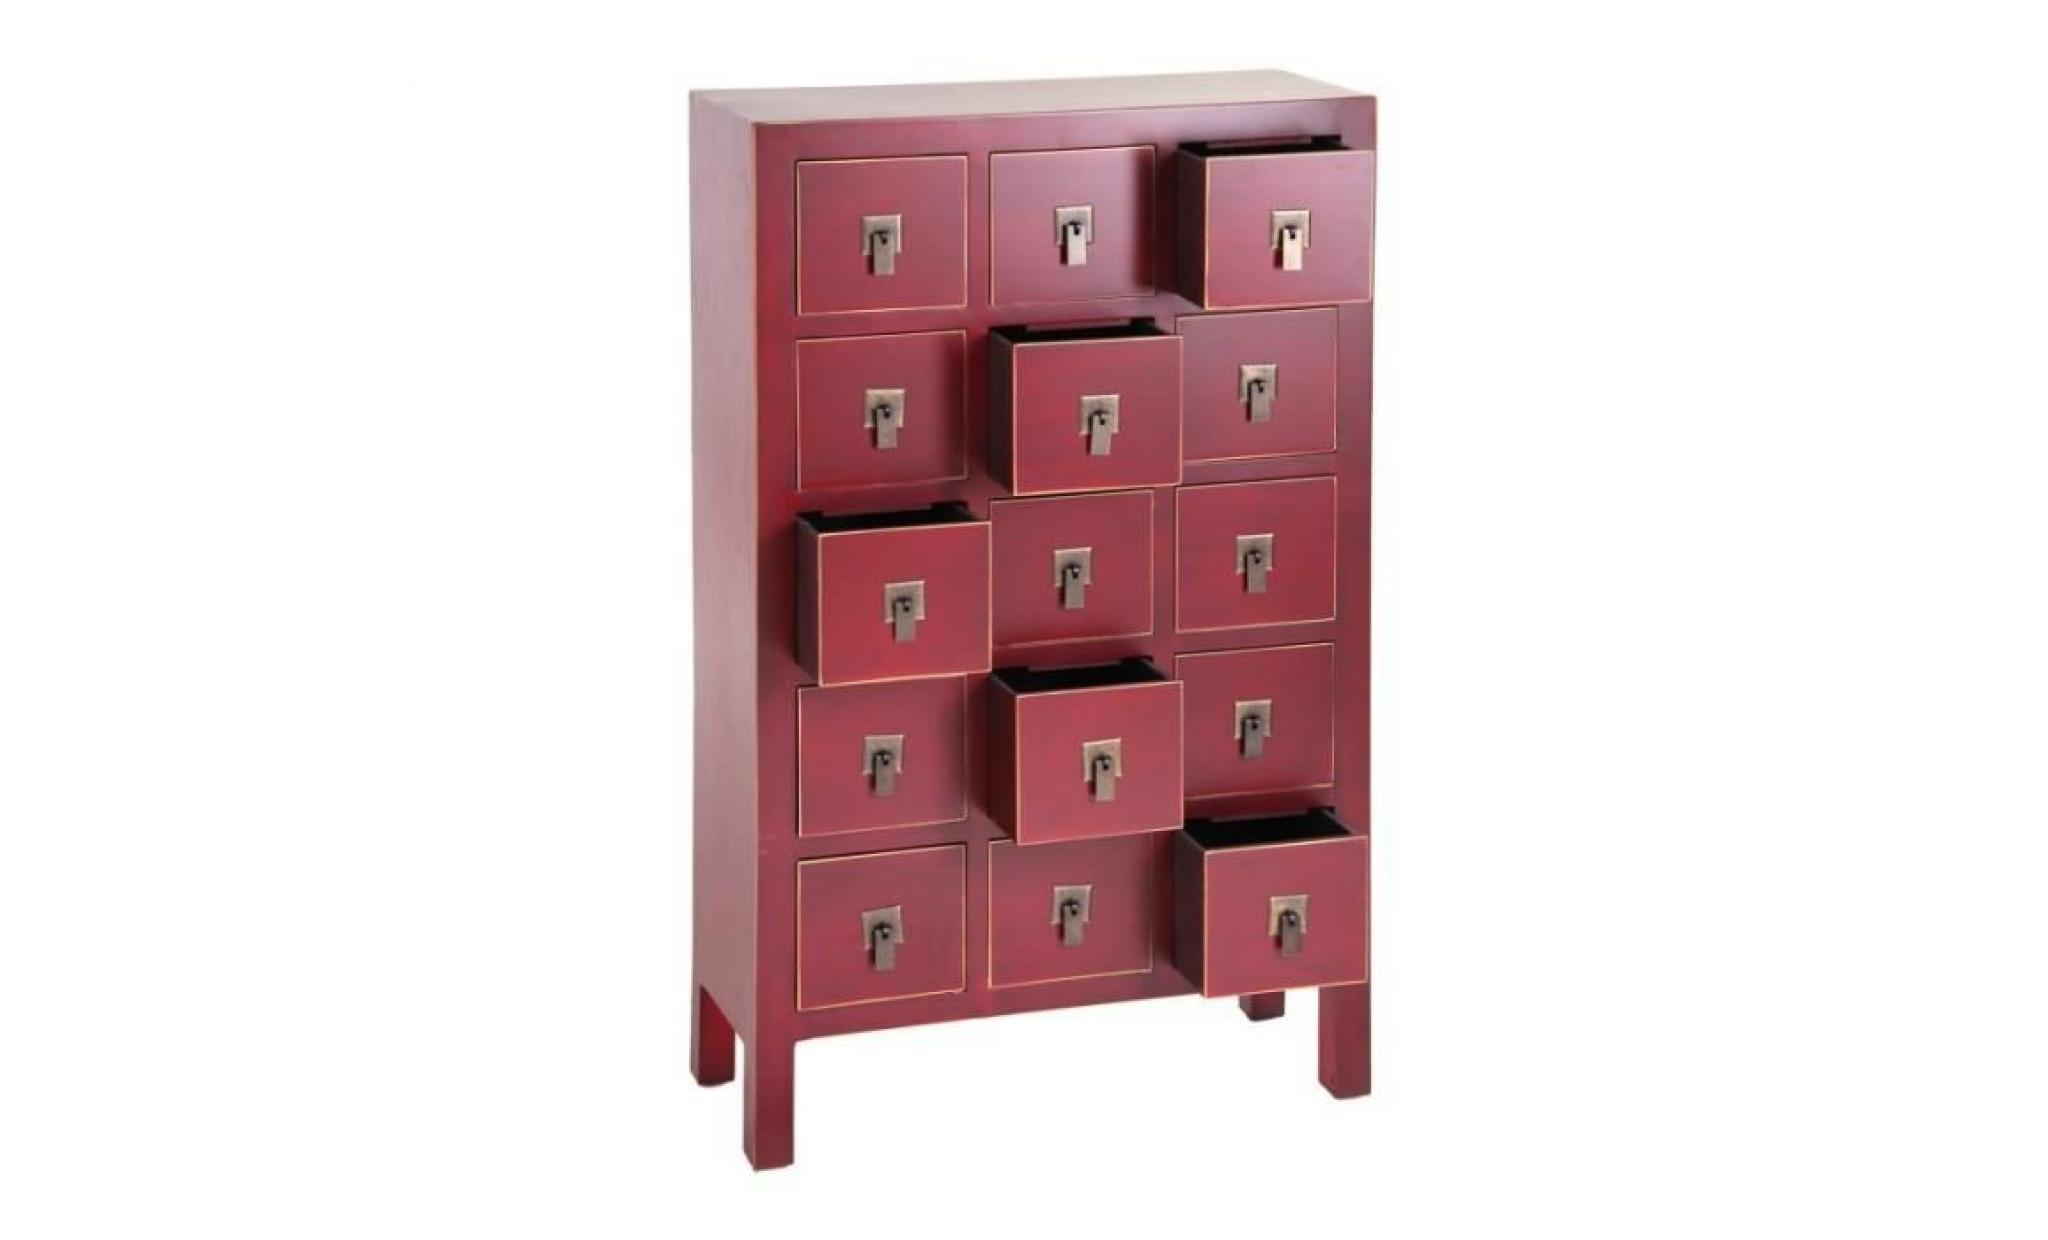 chiffonnier rouge meuble chinois 15 tiroirs   pekin   l 63 x l 26 x h 105 cm pas cher